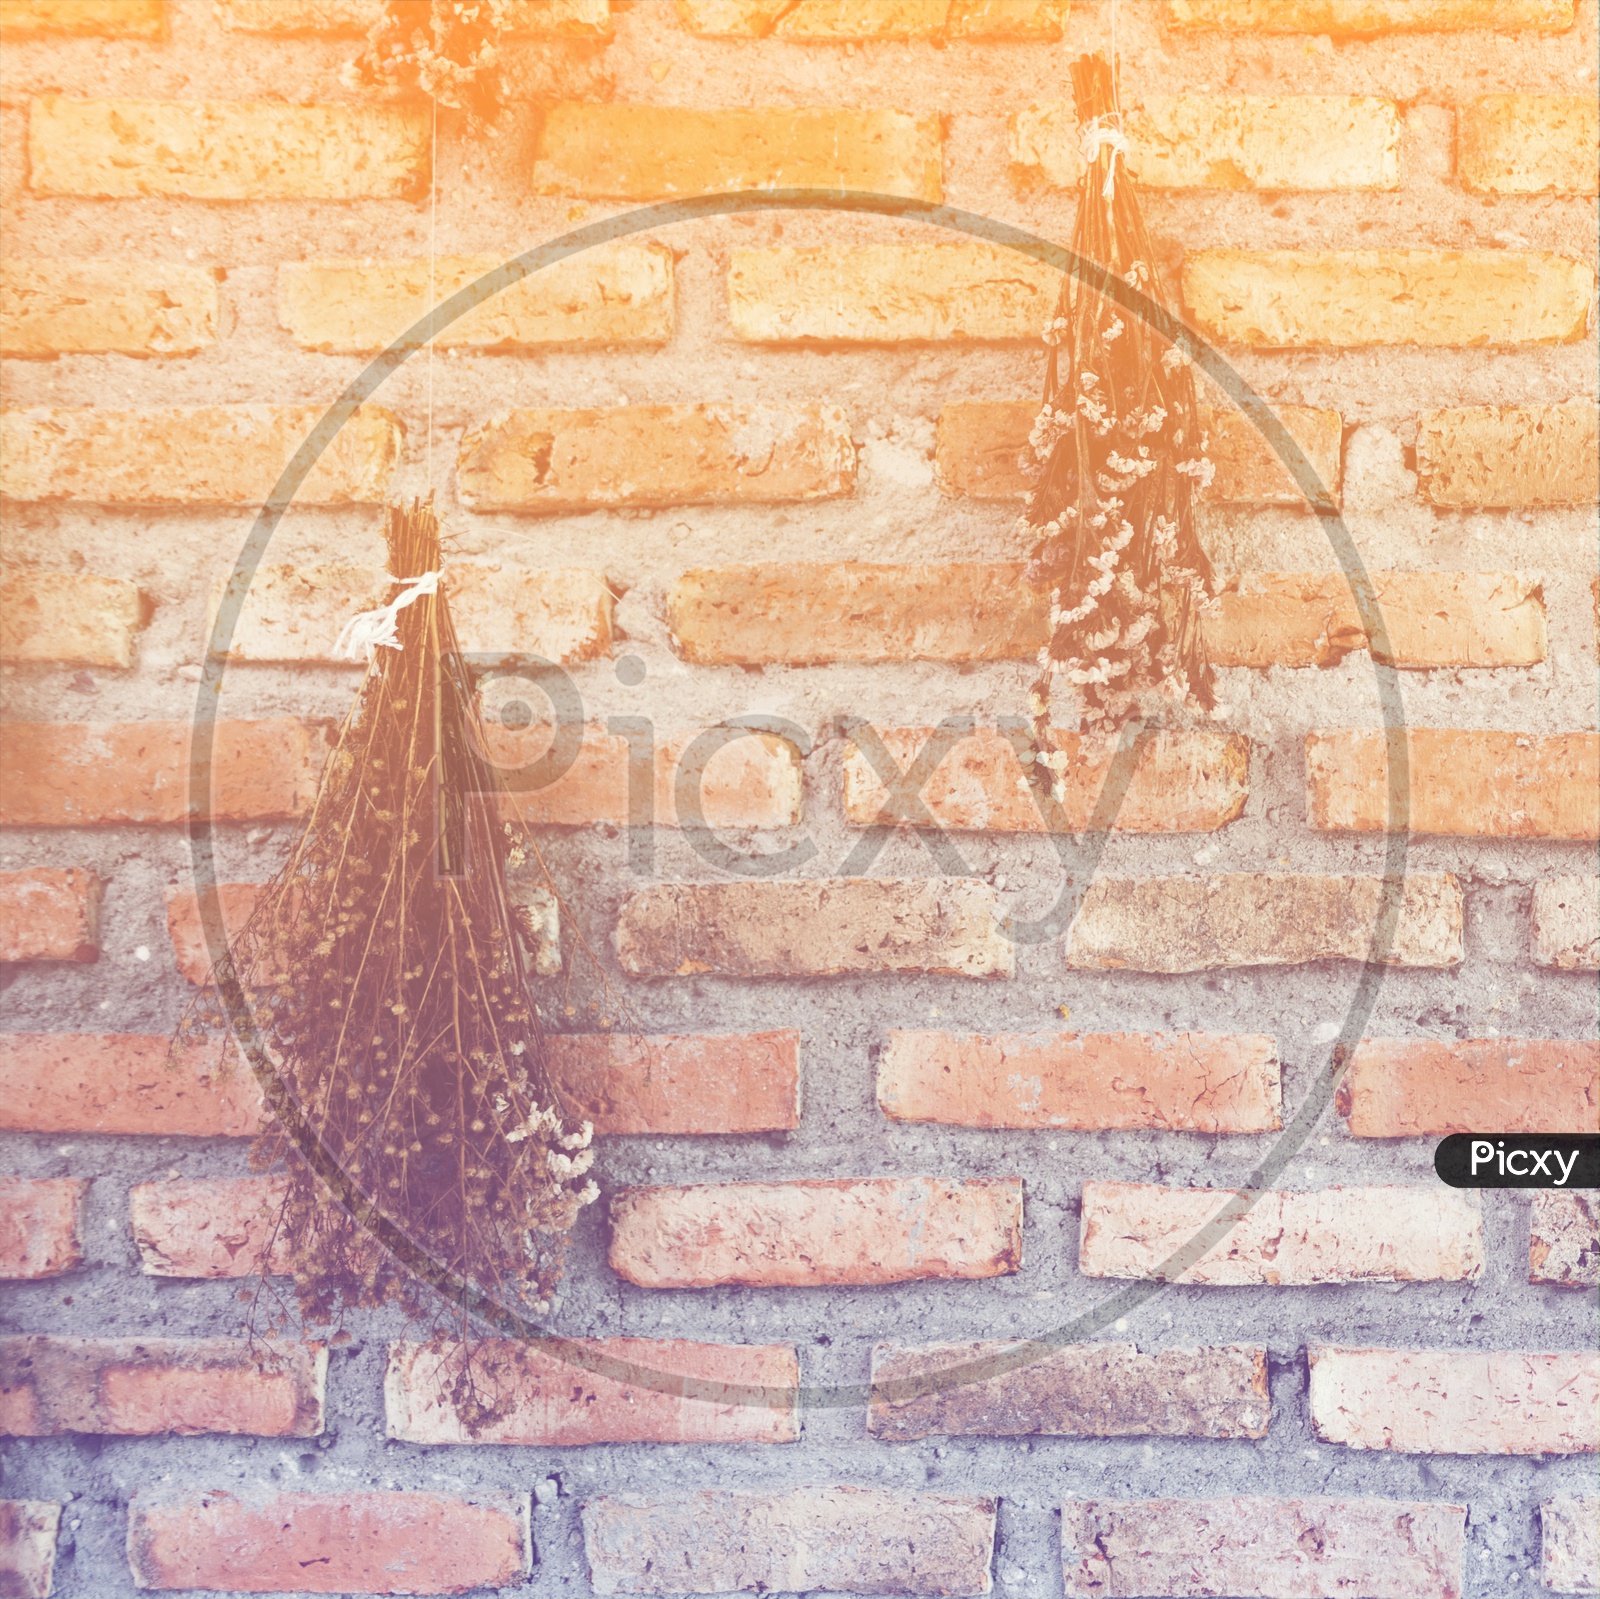 Dry flowers on brick wall, vintage filter image